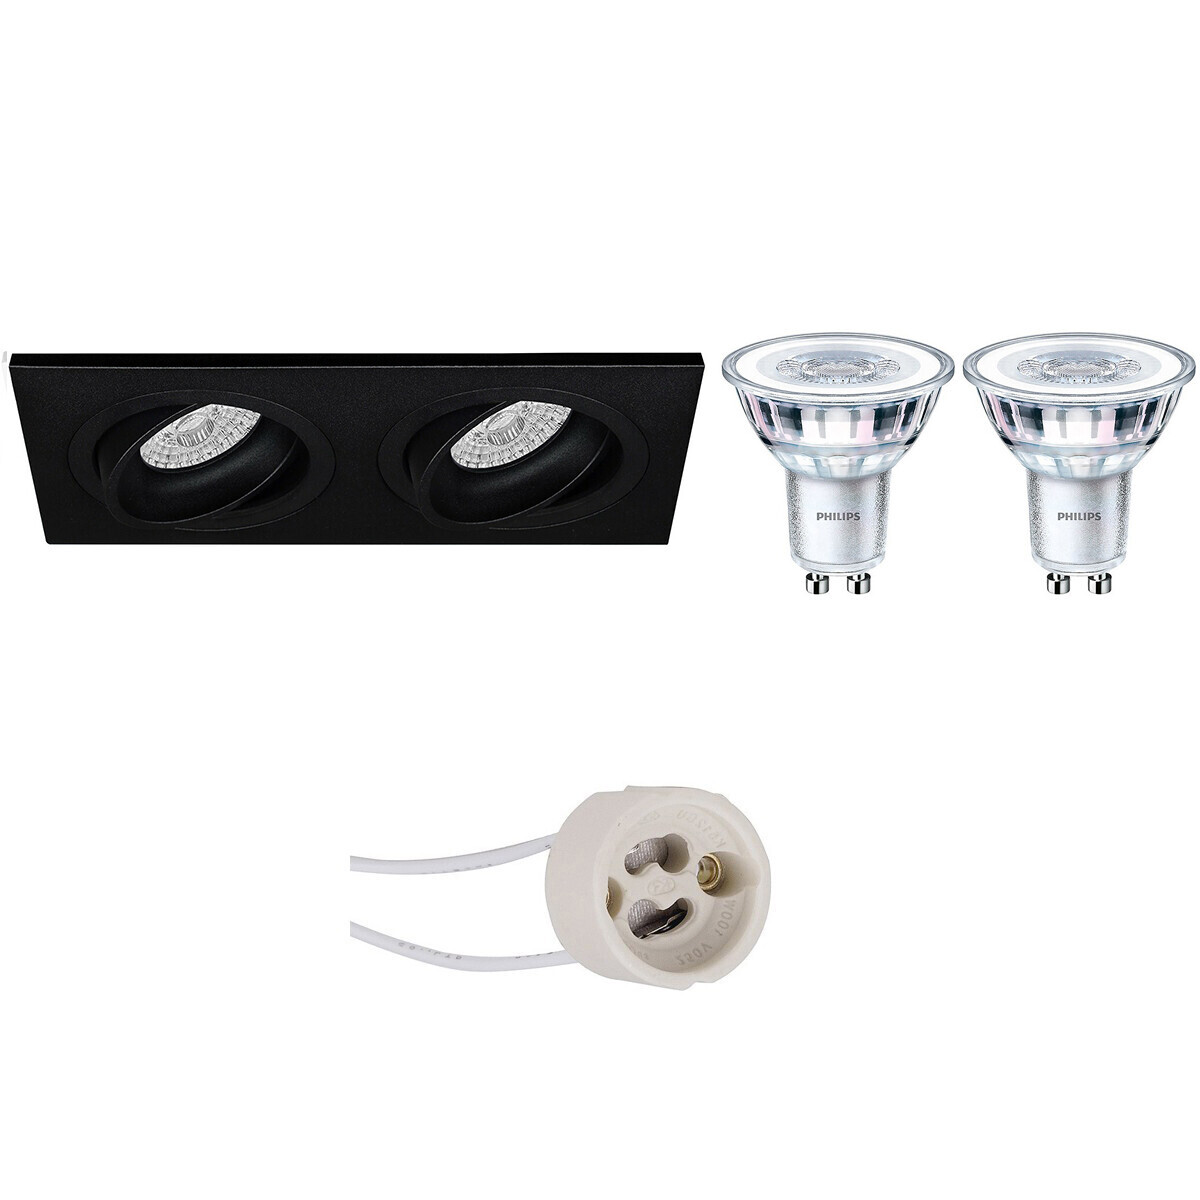 BES LED LED Spot Set - Pragmi Borny Pro - GU10 Fitting - Inbouw Rechthoek Dubbel - Mat Zwart - Kantelbaar - 175x92mm - Philips - CorePro 827 36D - 4W - Warm Wit 2700K - Dimbaar